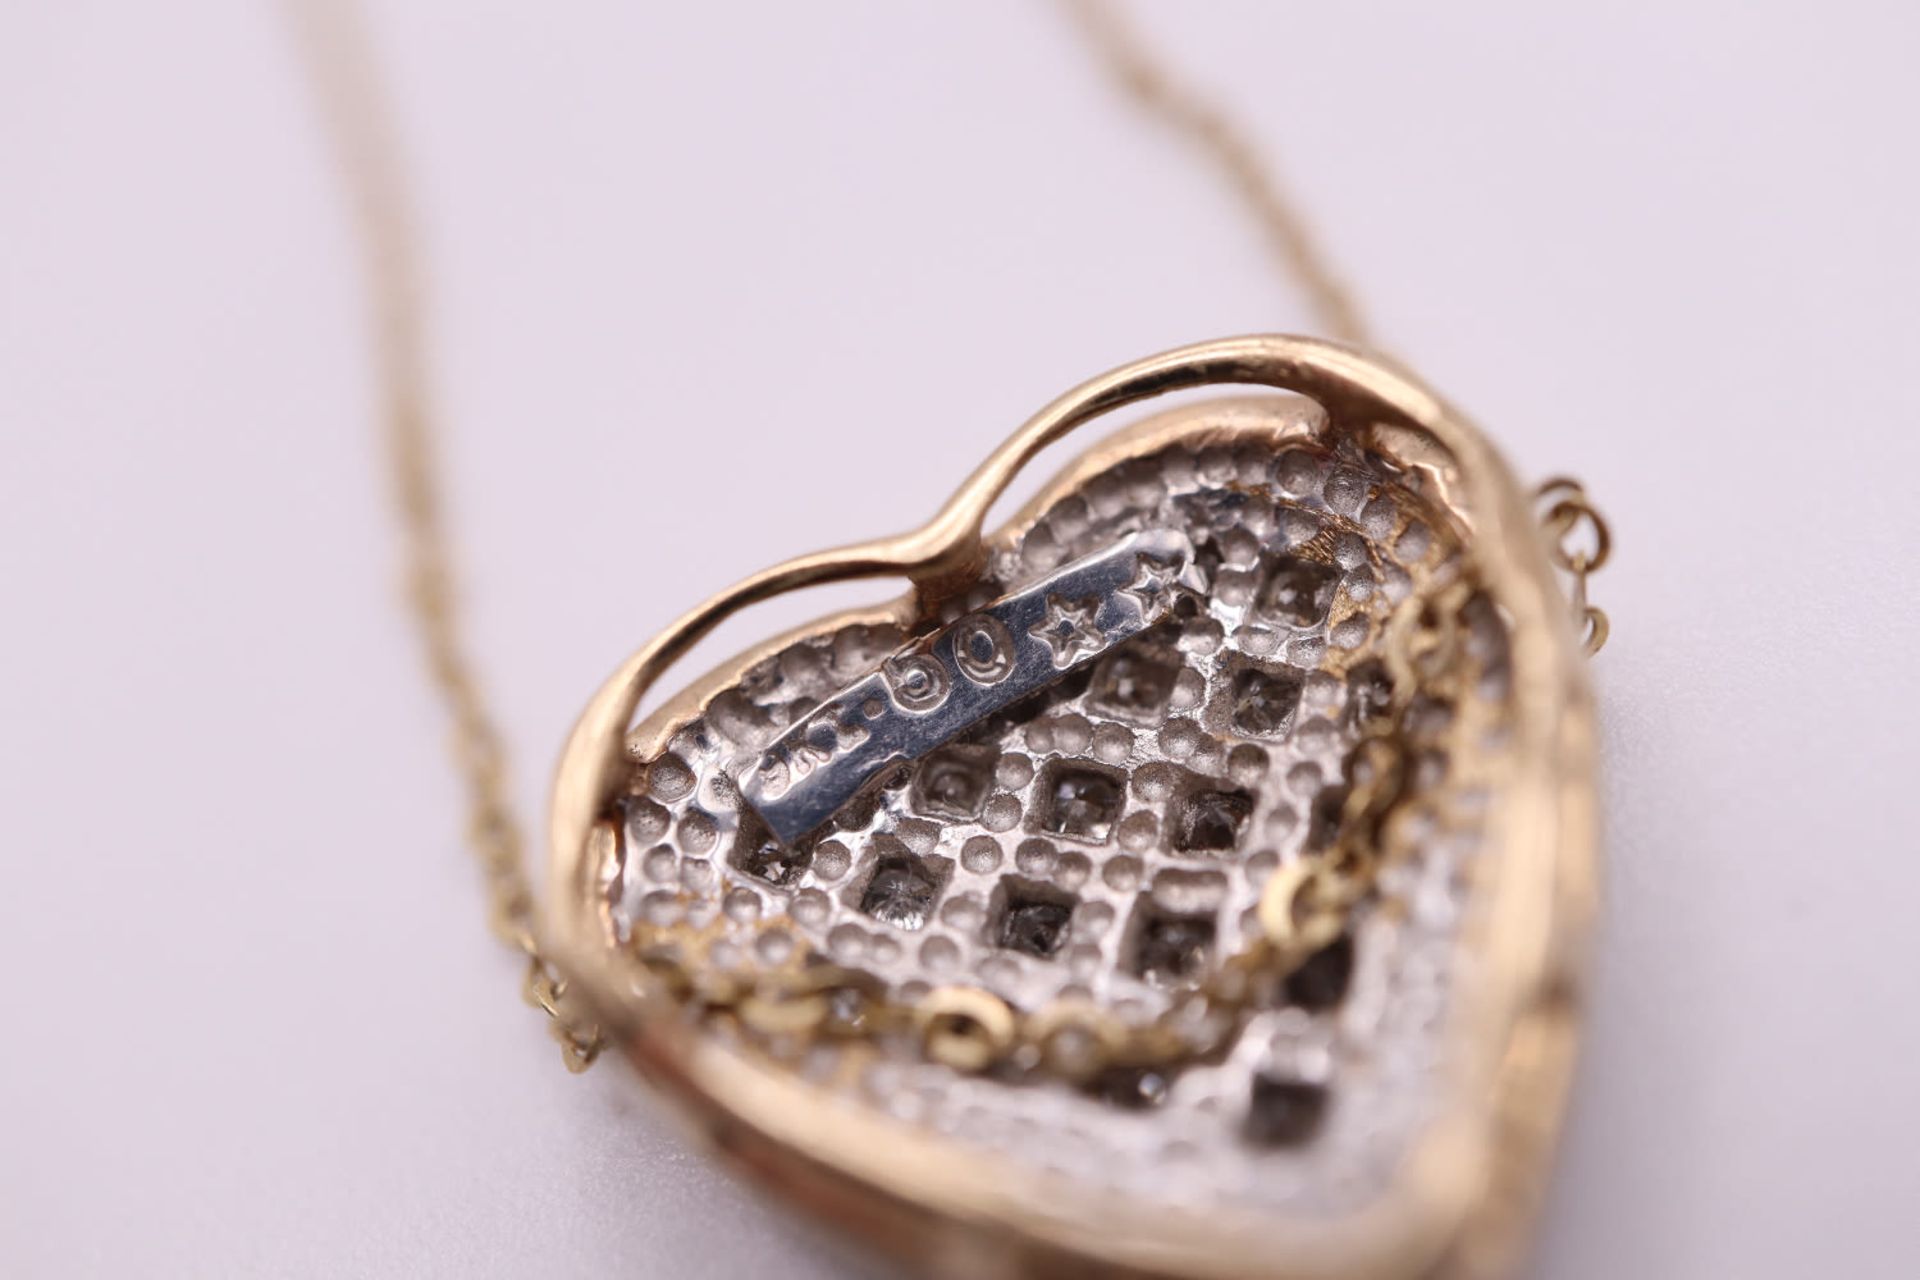 0.50CT DIAMOND 'HEART SHAPE' PENDANT in 9K '375' GOLD SETTING & CHAIN - Image 4 of 5